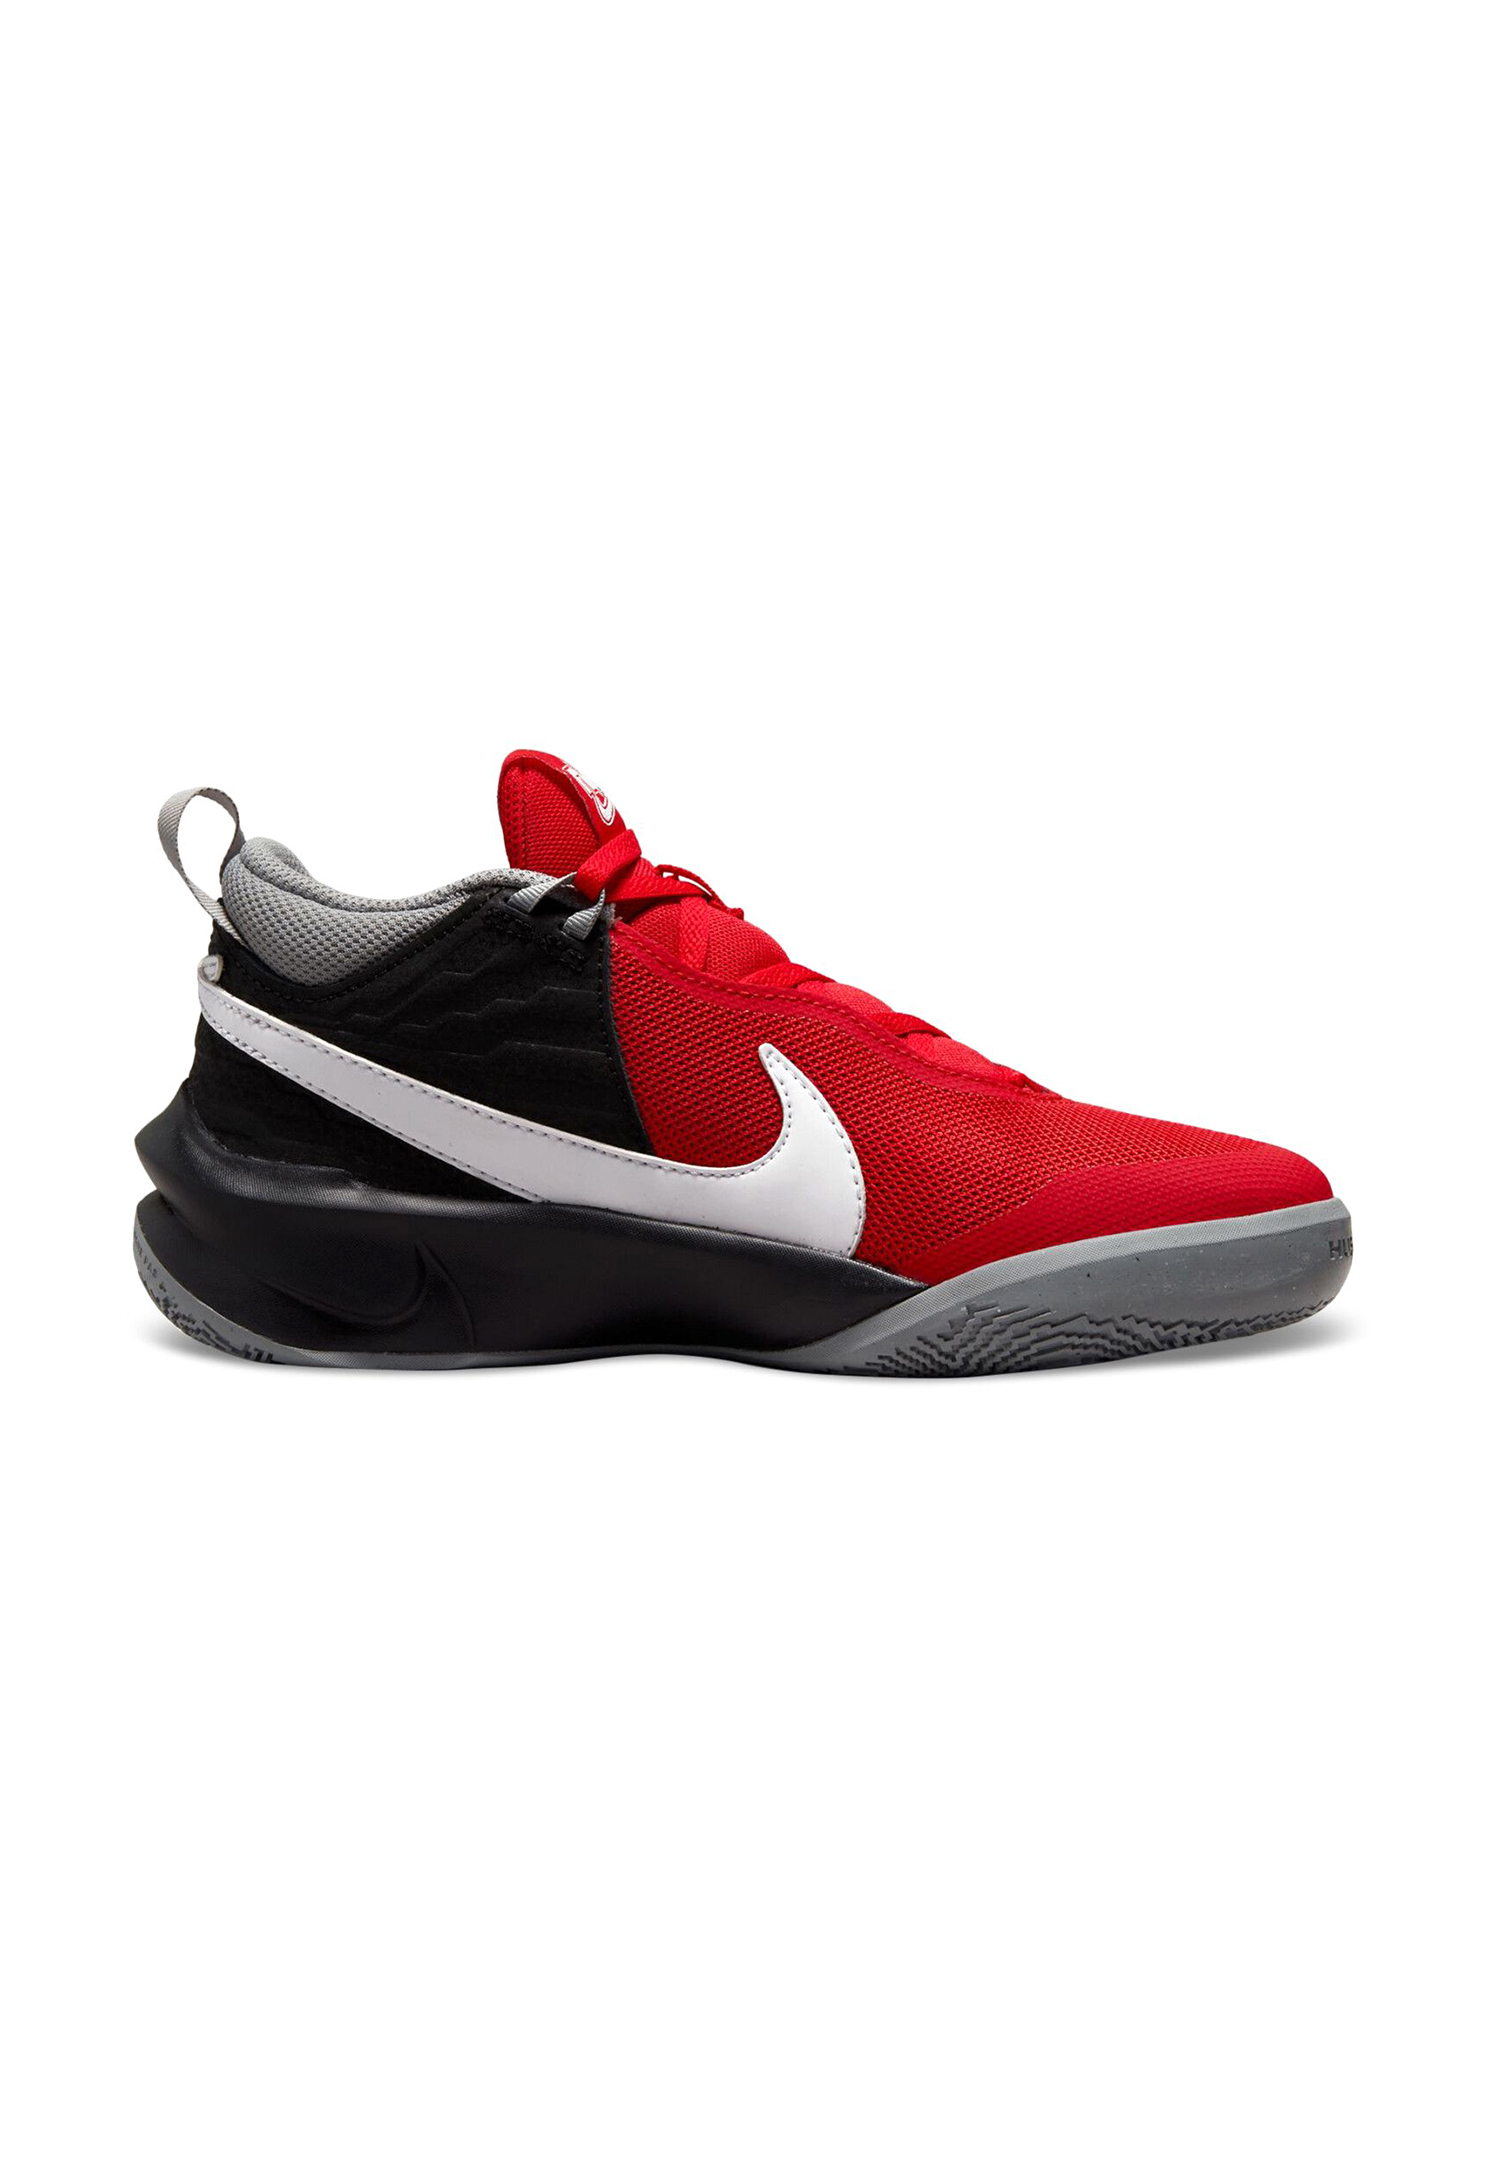 Nike TEAM HUSTLE D10 GS Kinder Sneaker Sportschuhe CW6735 607 rot